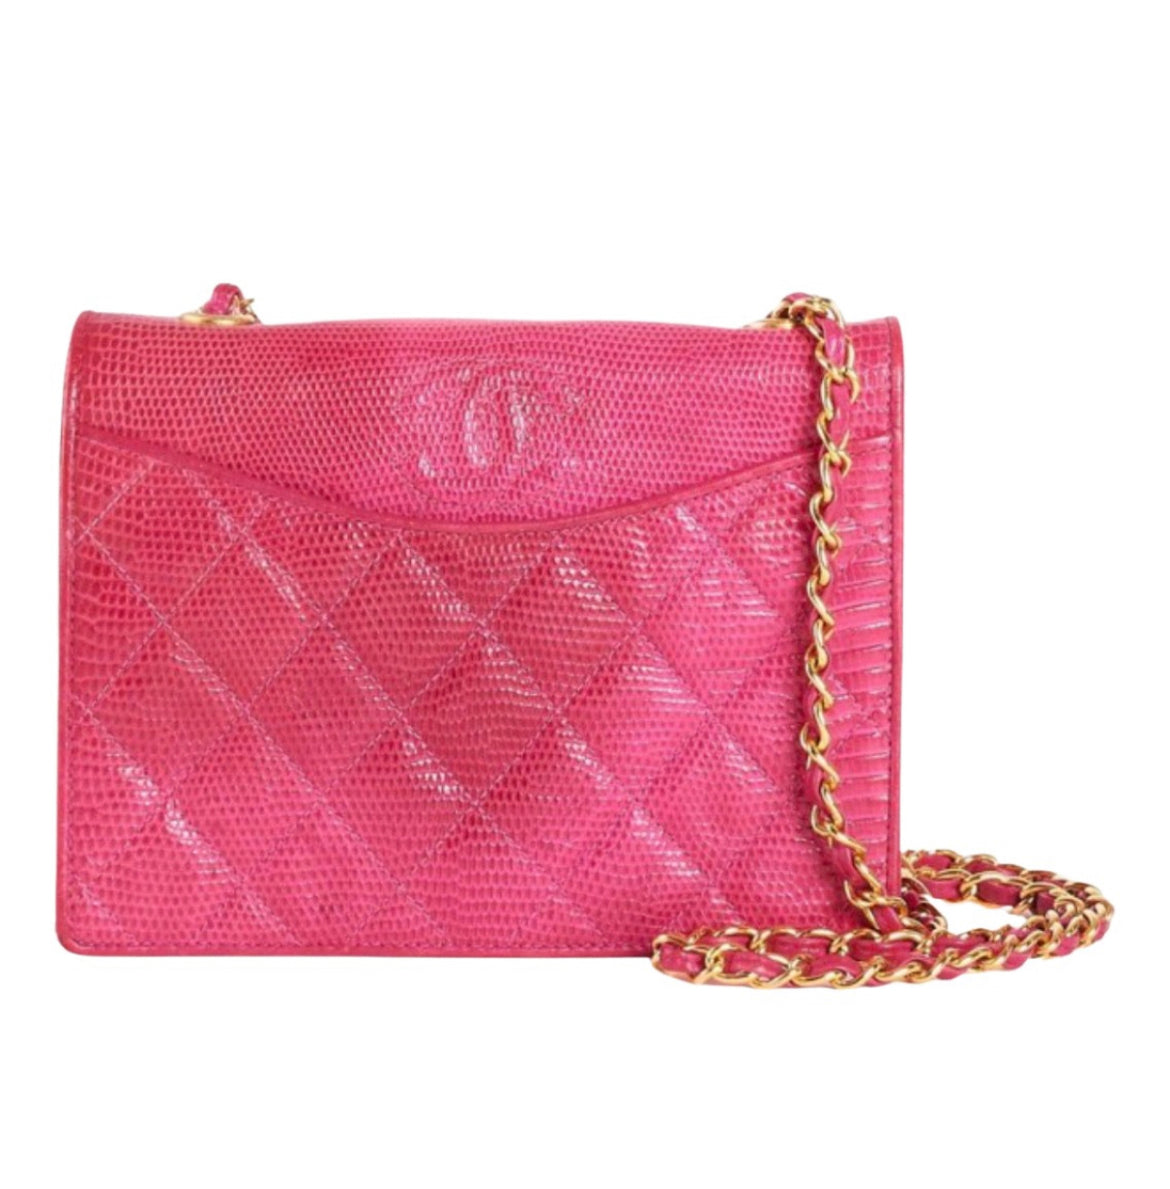 Vintage CHANEL Hot Pink Genuine Lizard Leather Envelop Style 